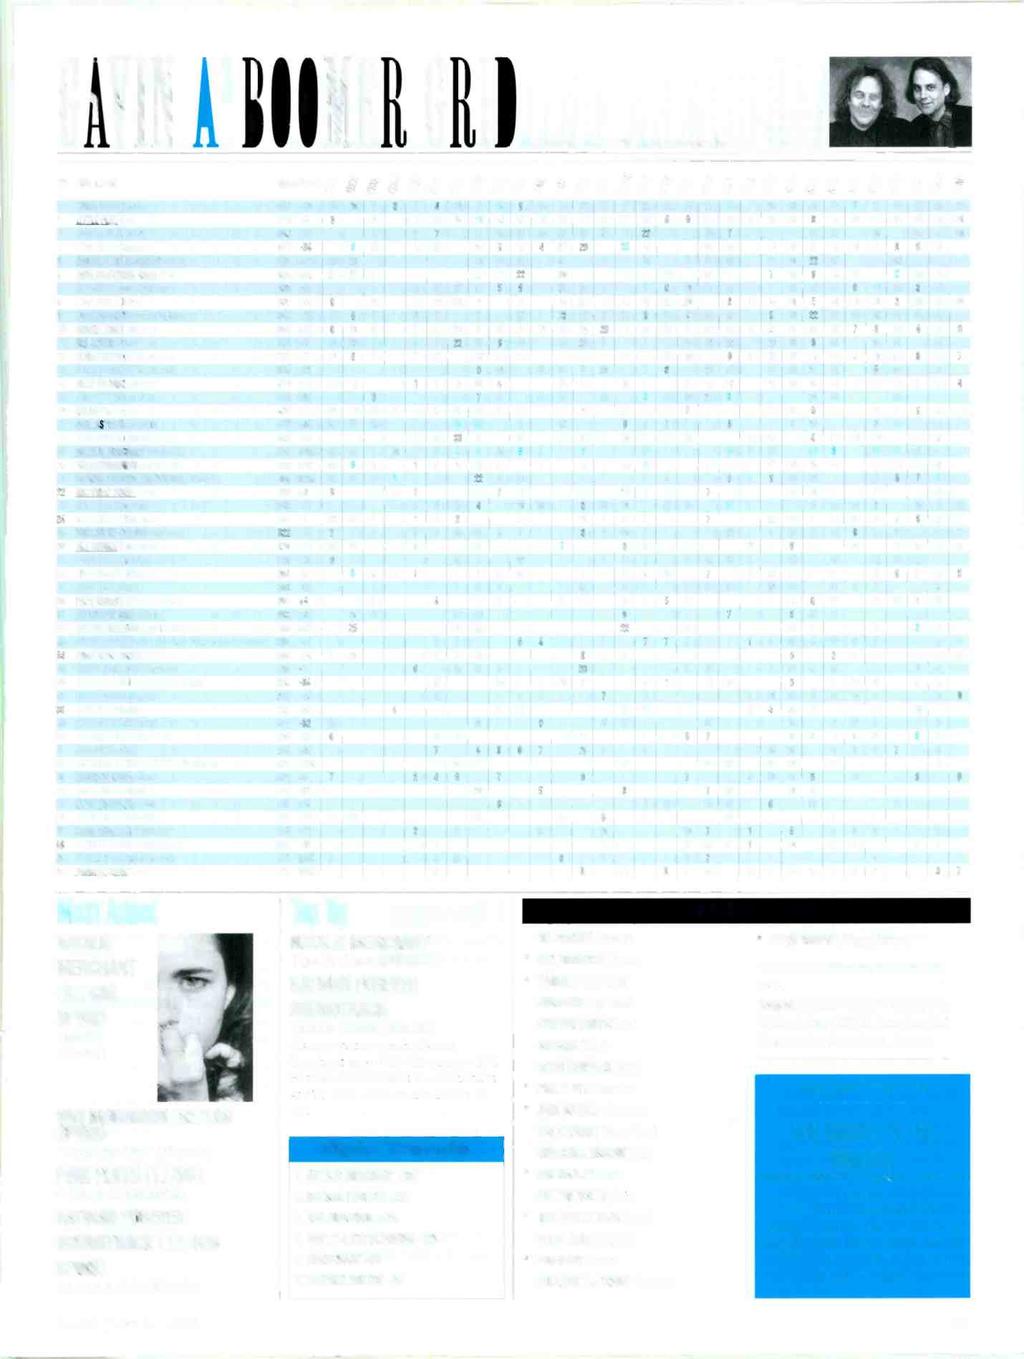 GAVIN A3BOOYER Album Adult Alternative TW Title (Label) Spins Trend,::`; s`j? LJJ O O <7, `*"' co ck.